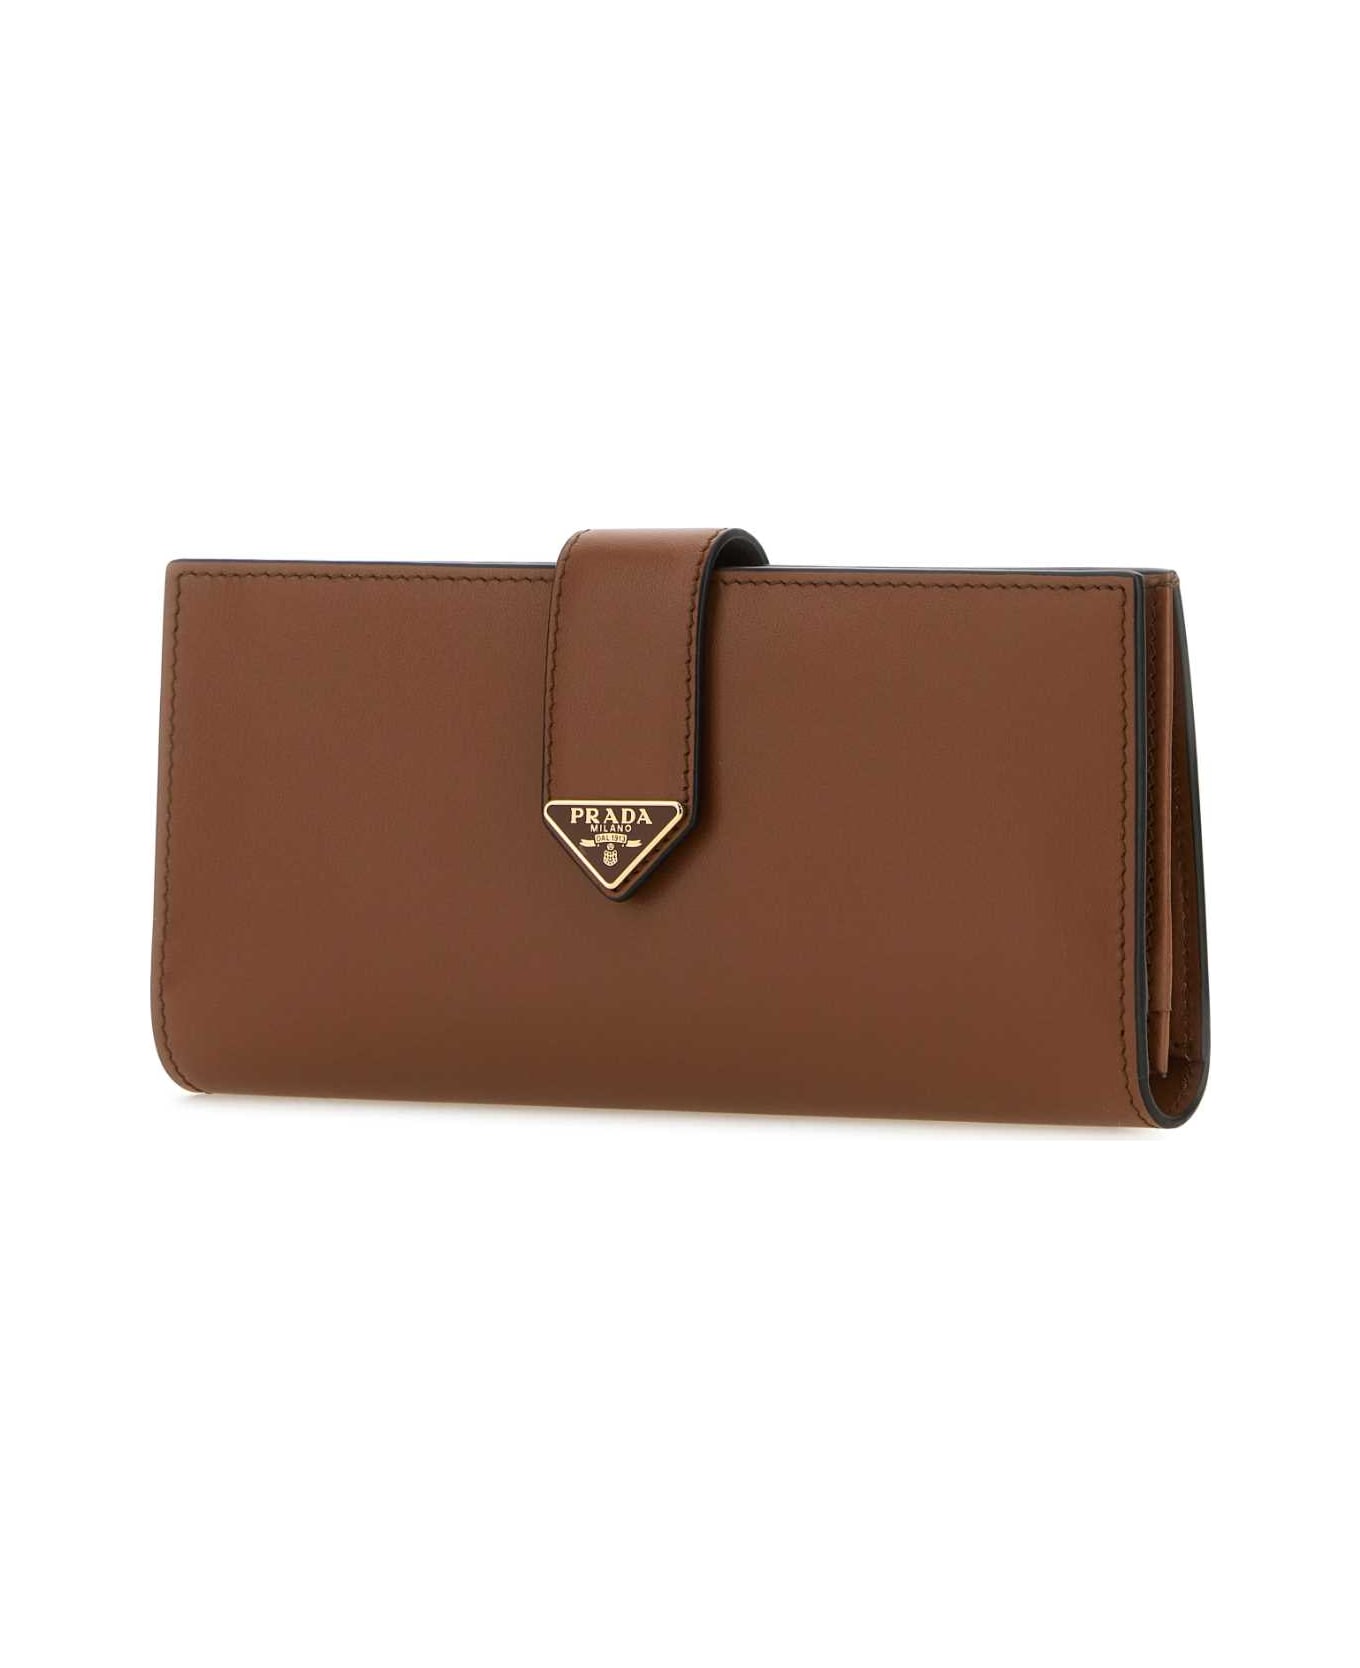 Prada Brown Leather Large Wallet - COGNAC 財布